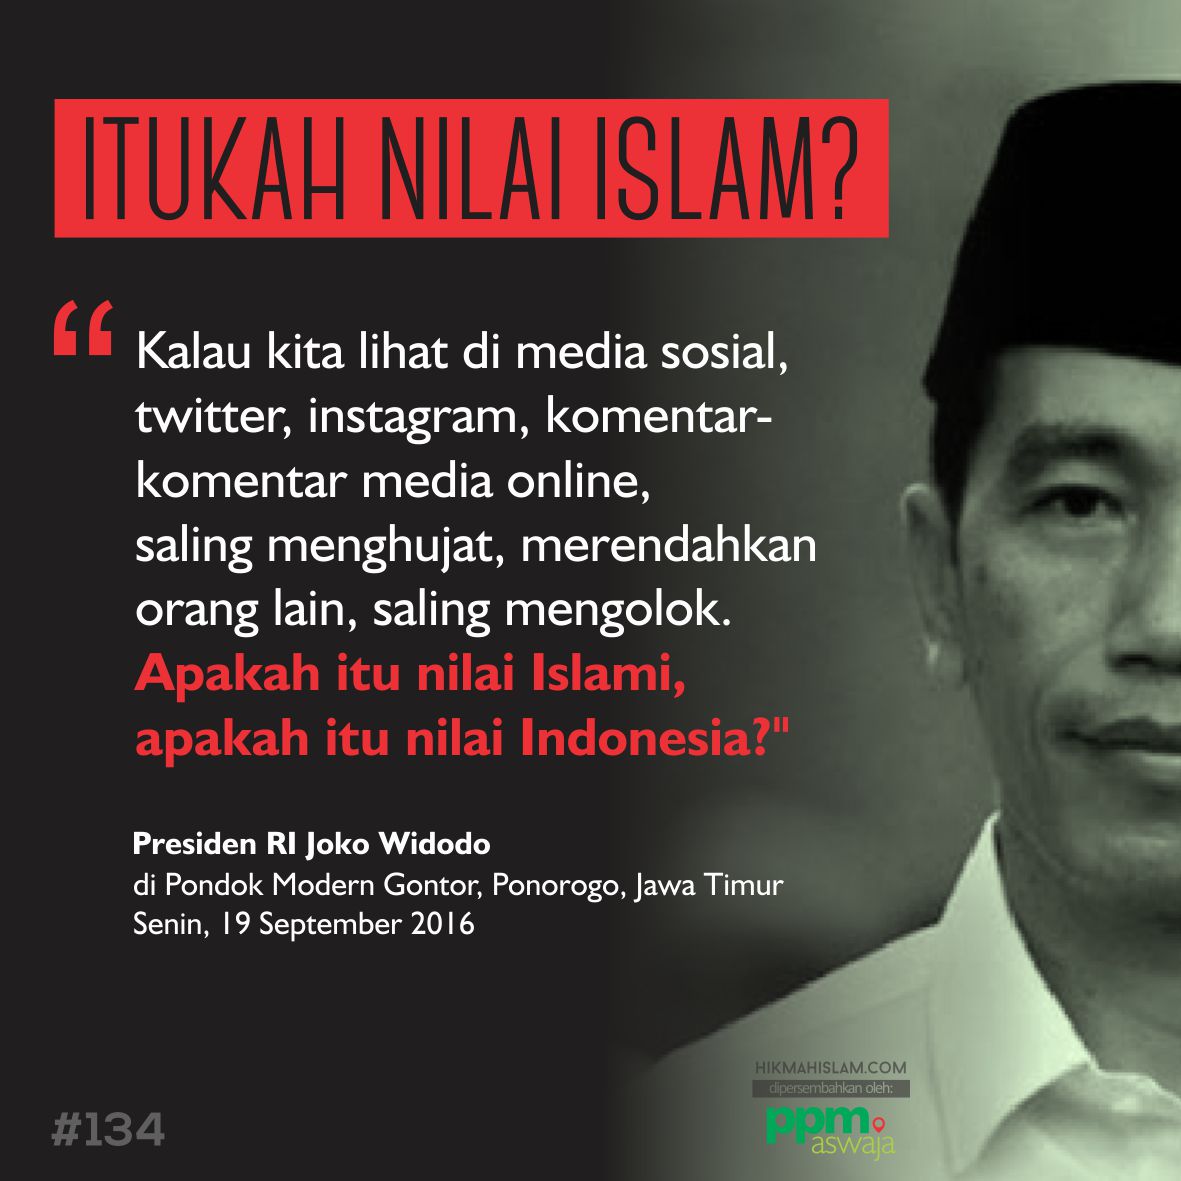 Hikmah Islam Hikmahislamcom Twitter